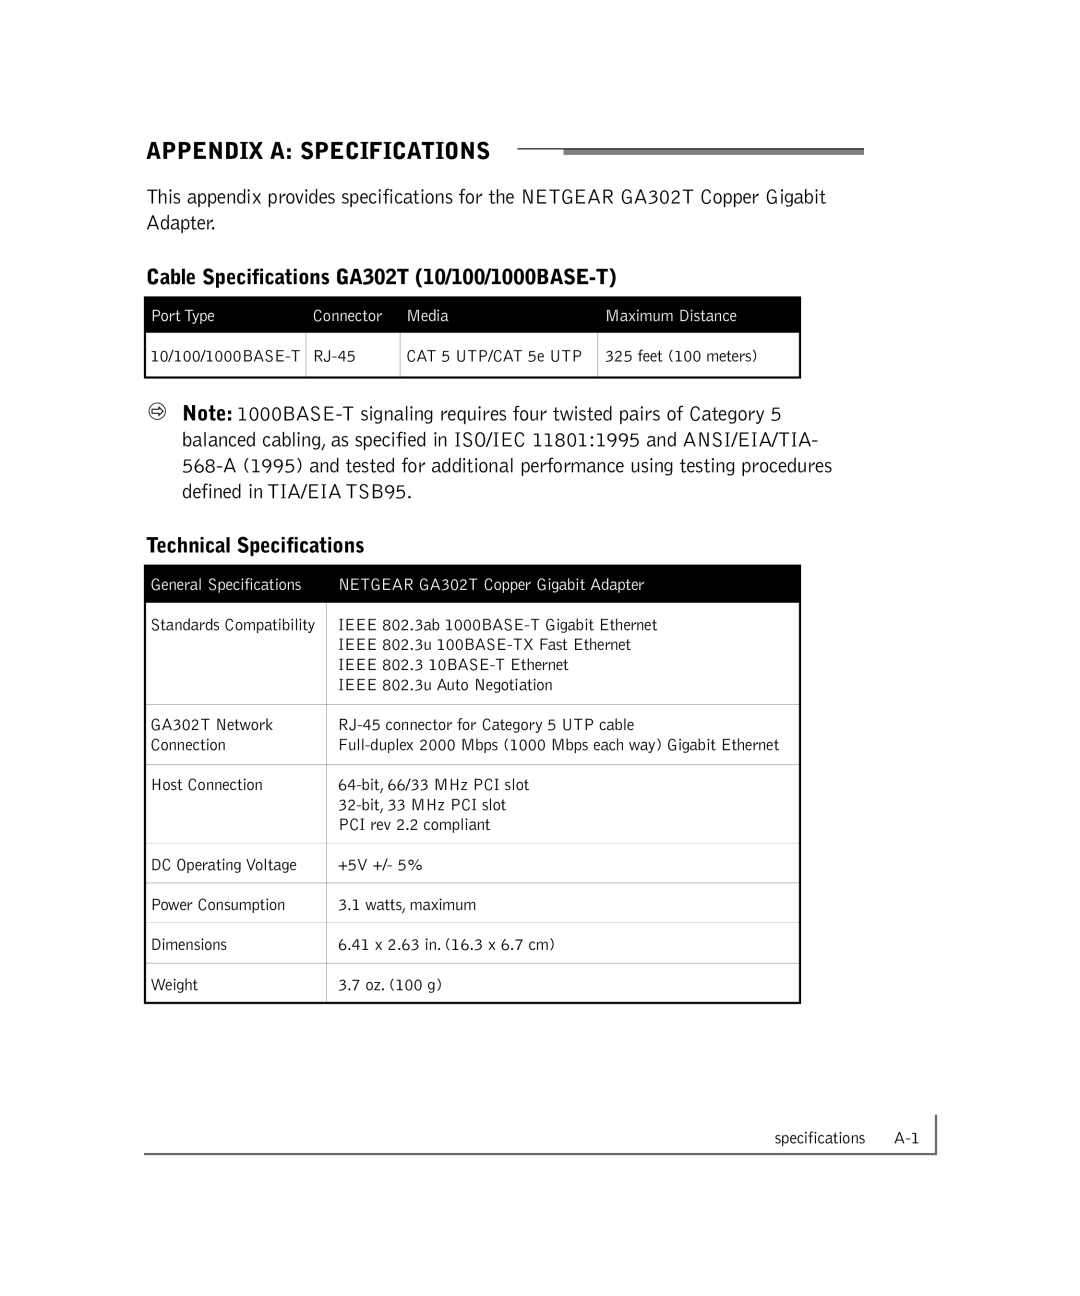 NETGEAR manual Appendix A Specifications, Cable Specifications GA302T 10/100/1000BASE-T, Technical Specifications 